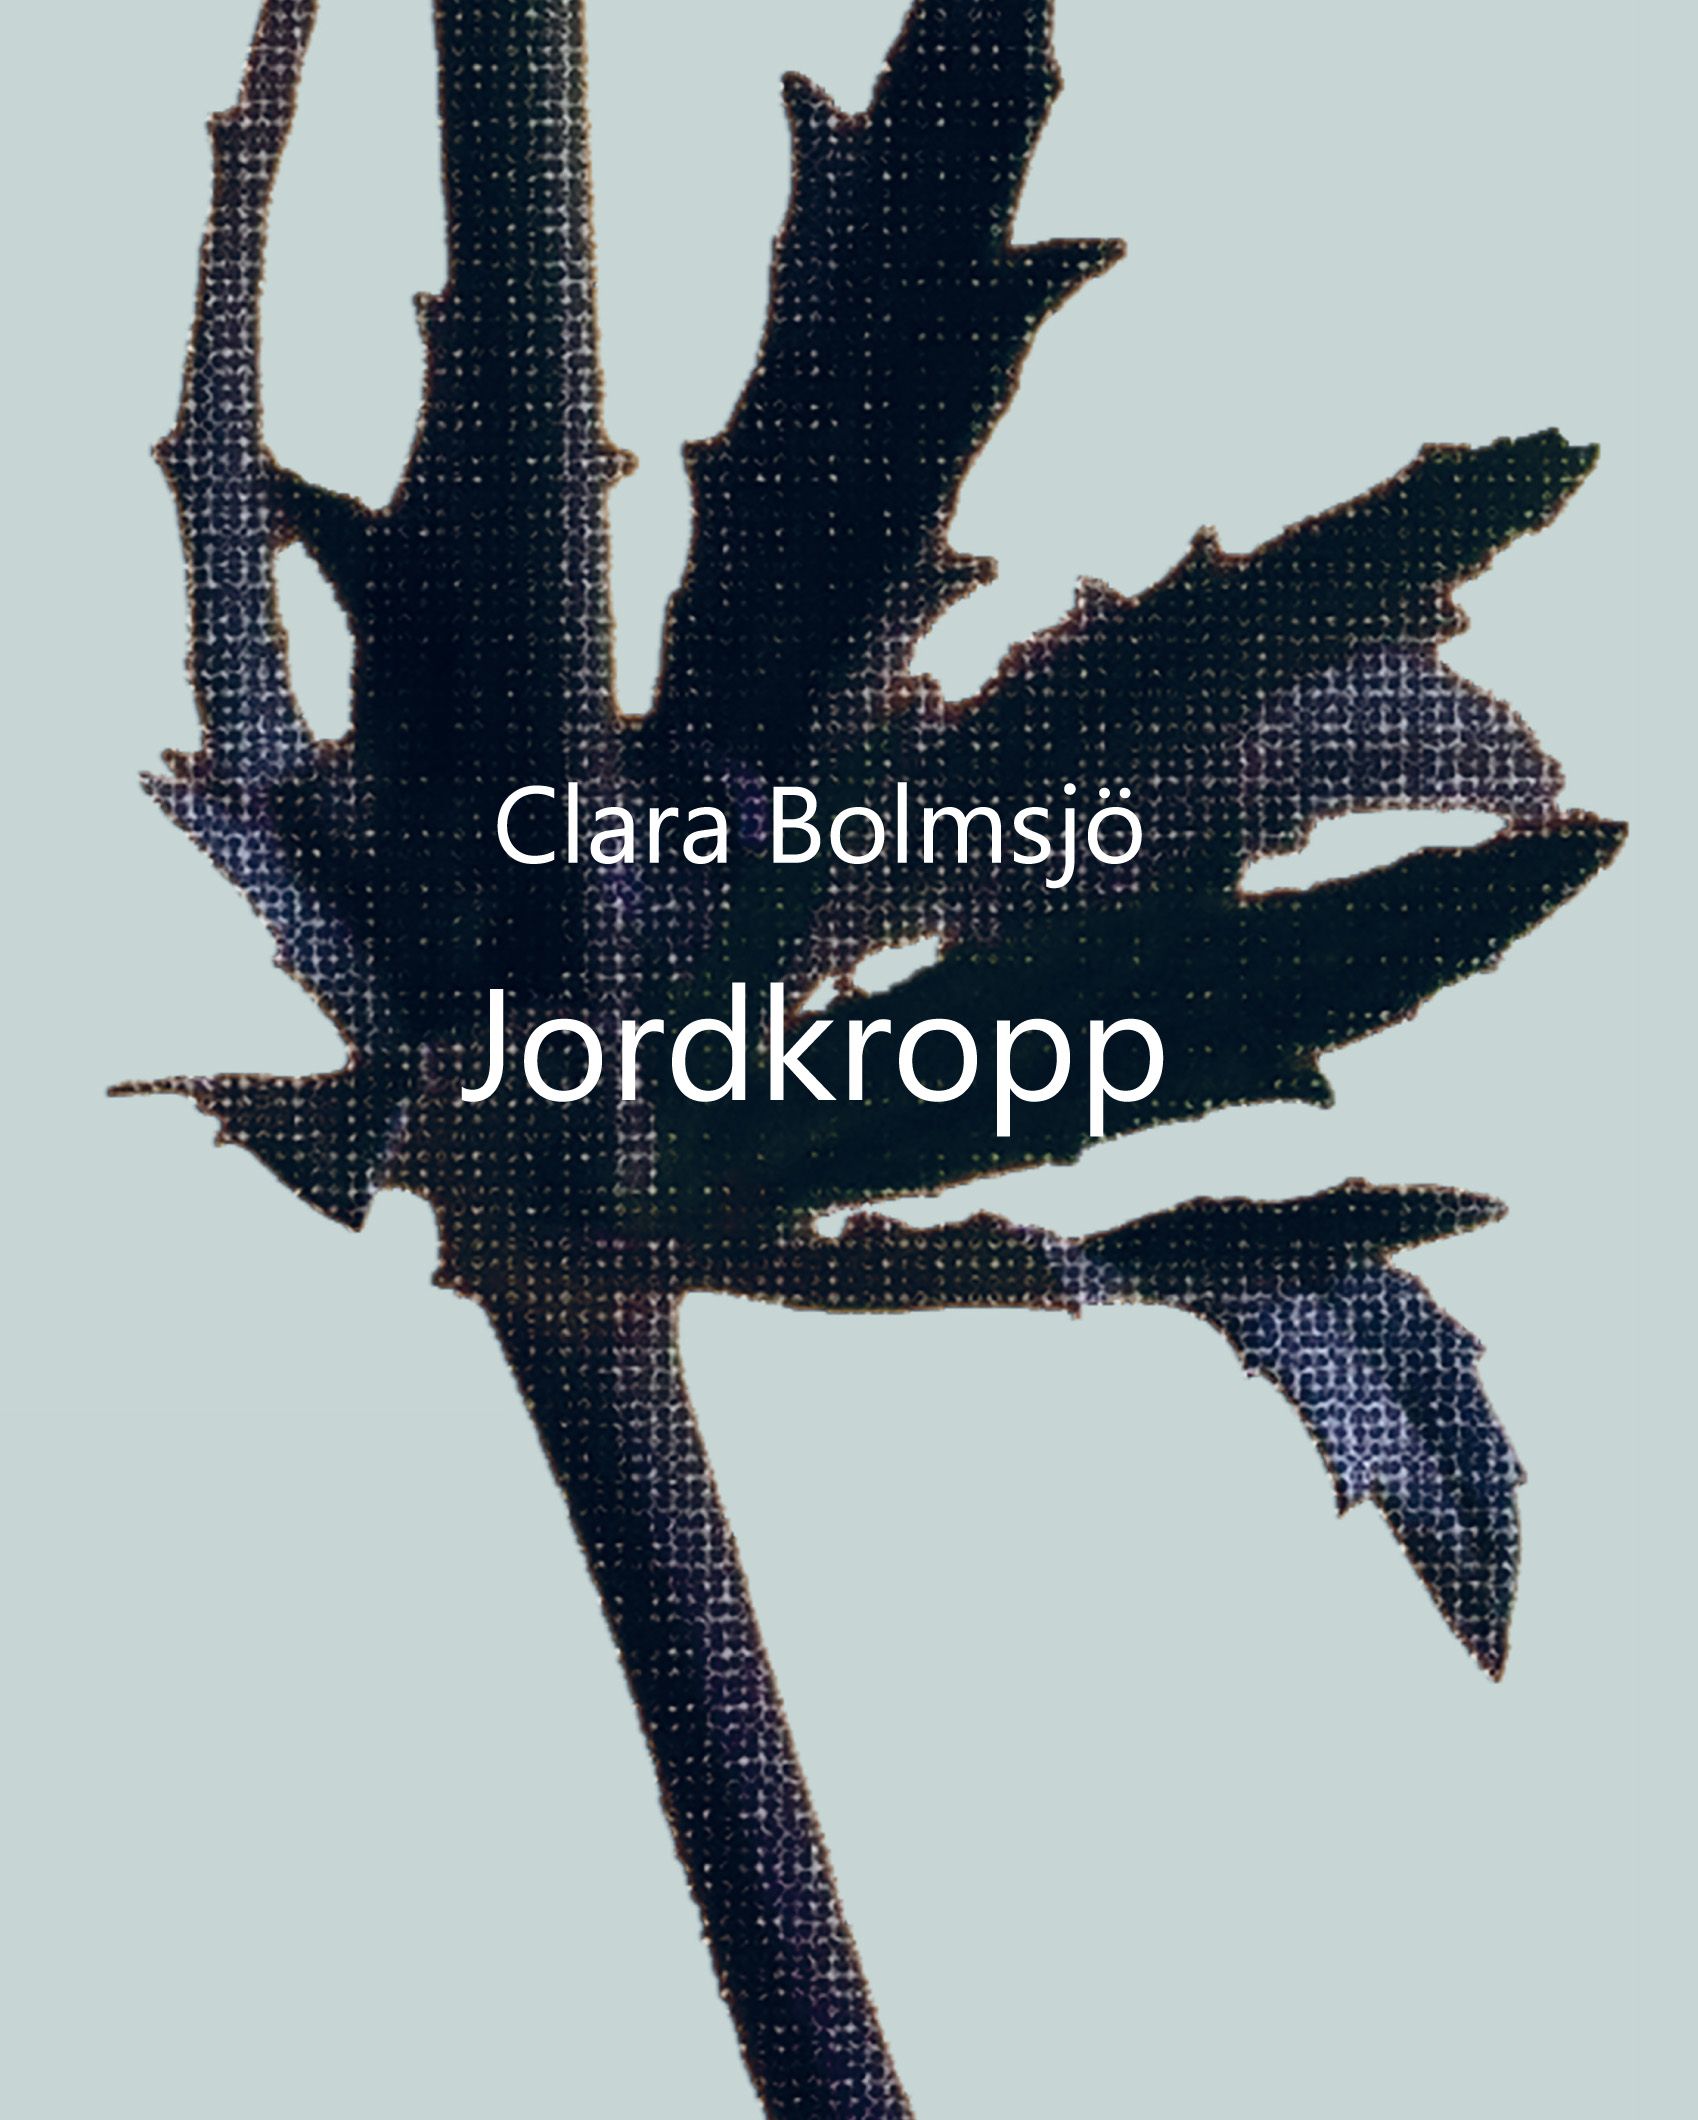 Jordkropp, eBook by Clara Bolmsjö